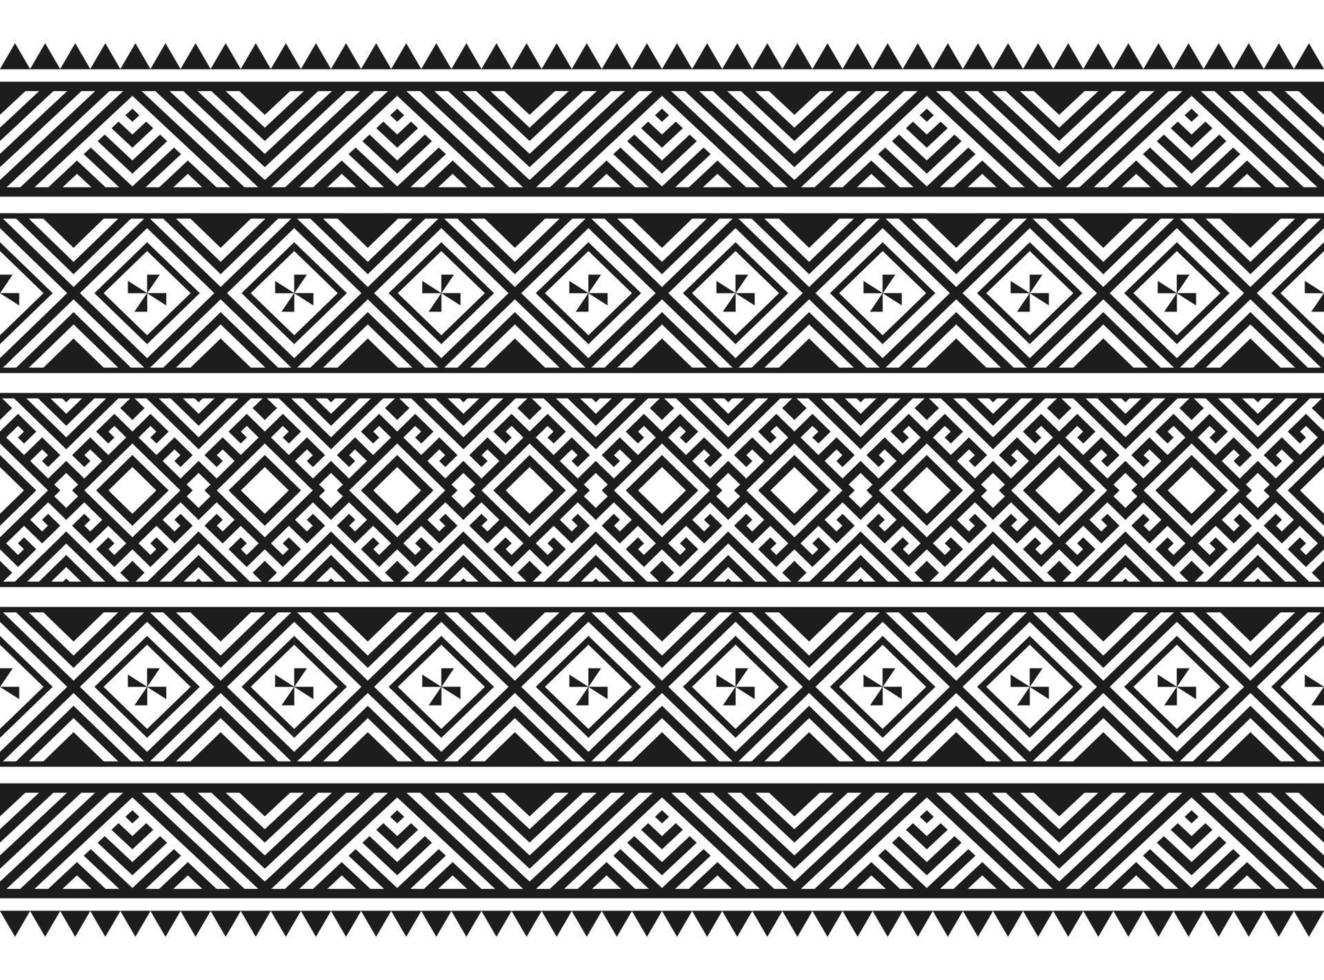 arte tribal étnico de patrón africano para textiles, estampados, tarjetas de felicitación, decoración o fondo, garabato tribal vector